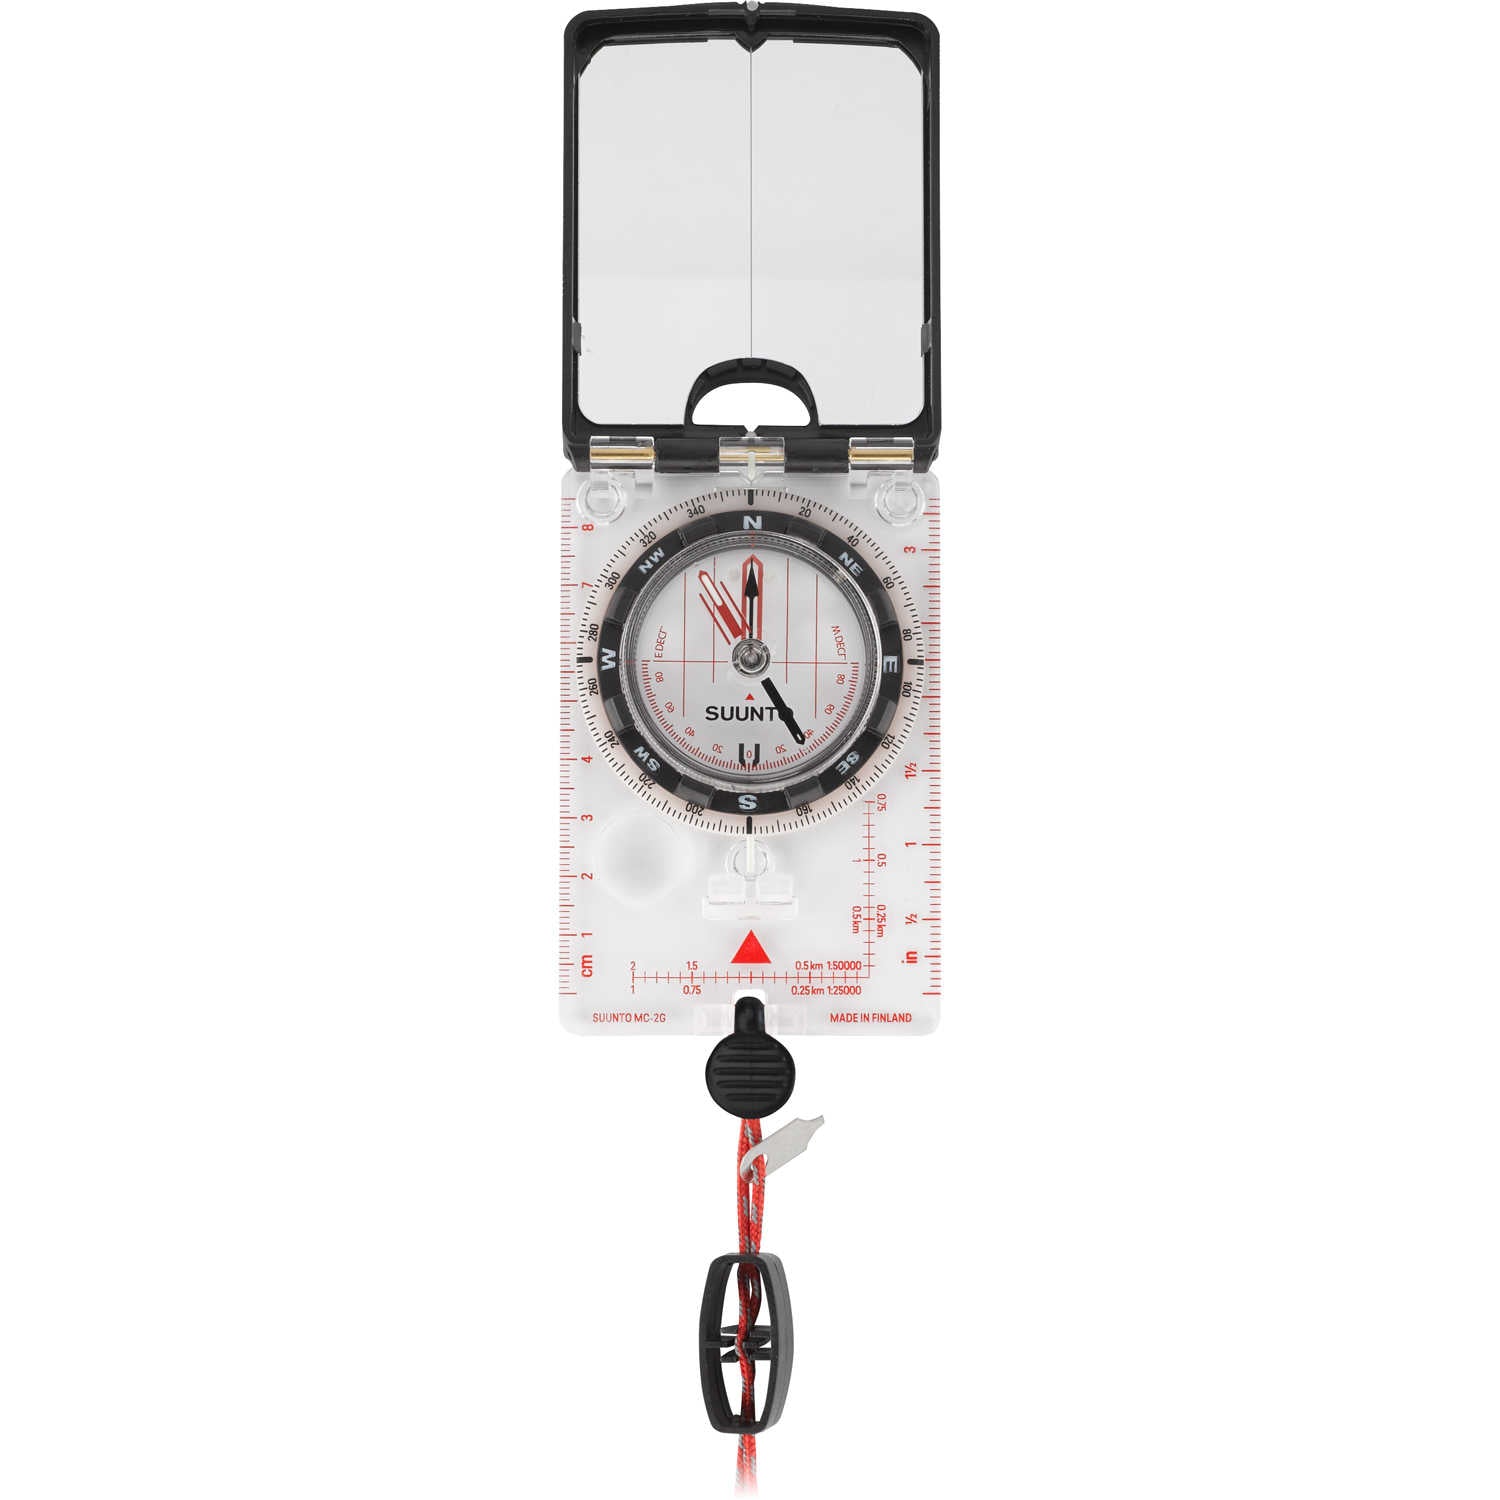 Suunto Navigator Mirror Sighting Compass MC2G with Global Needle